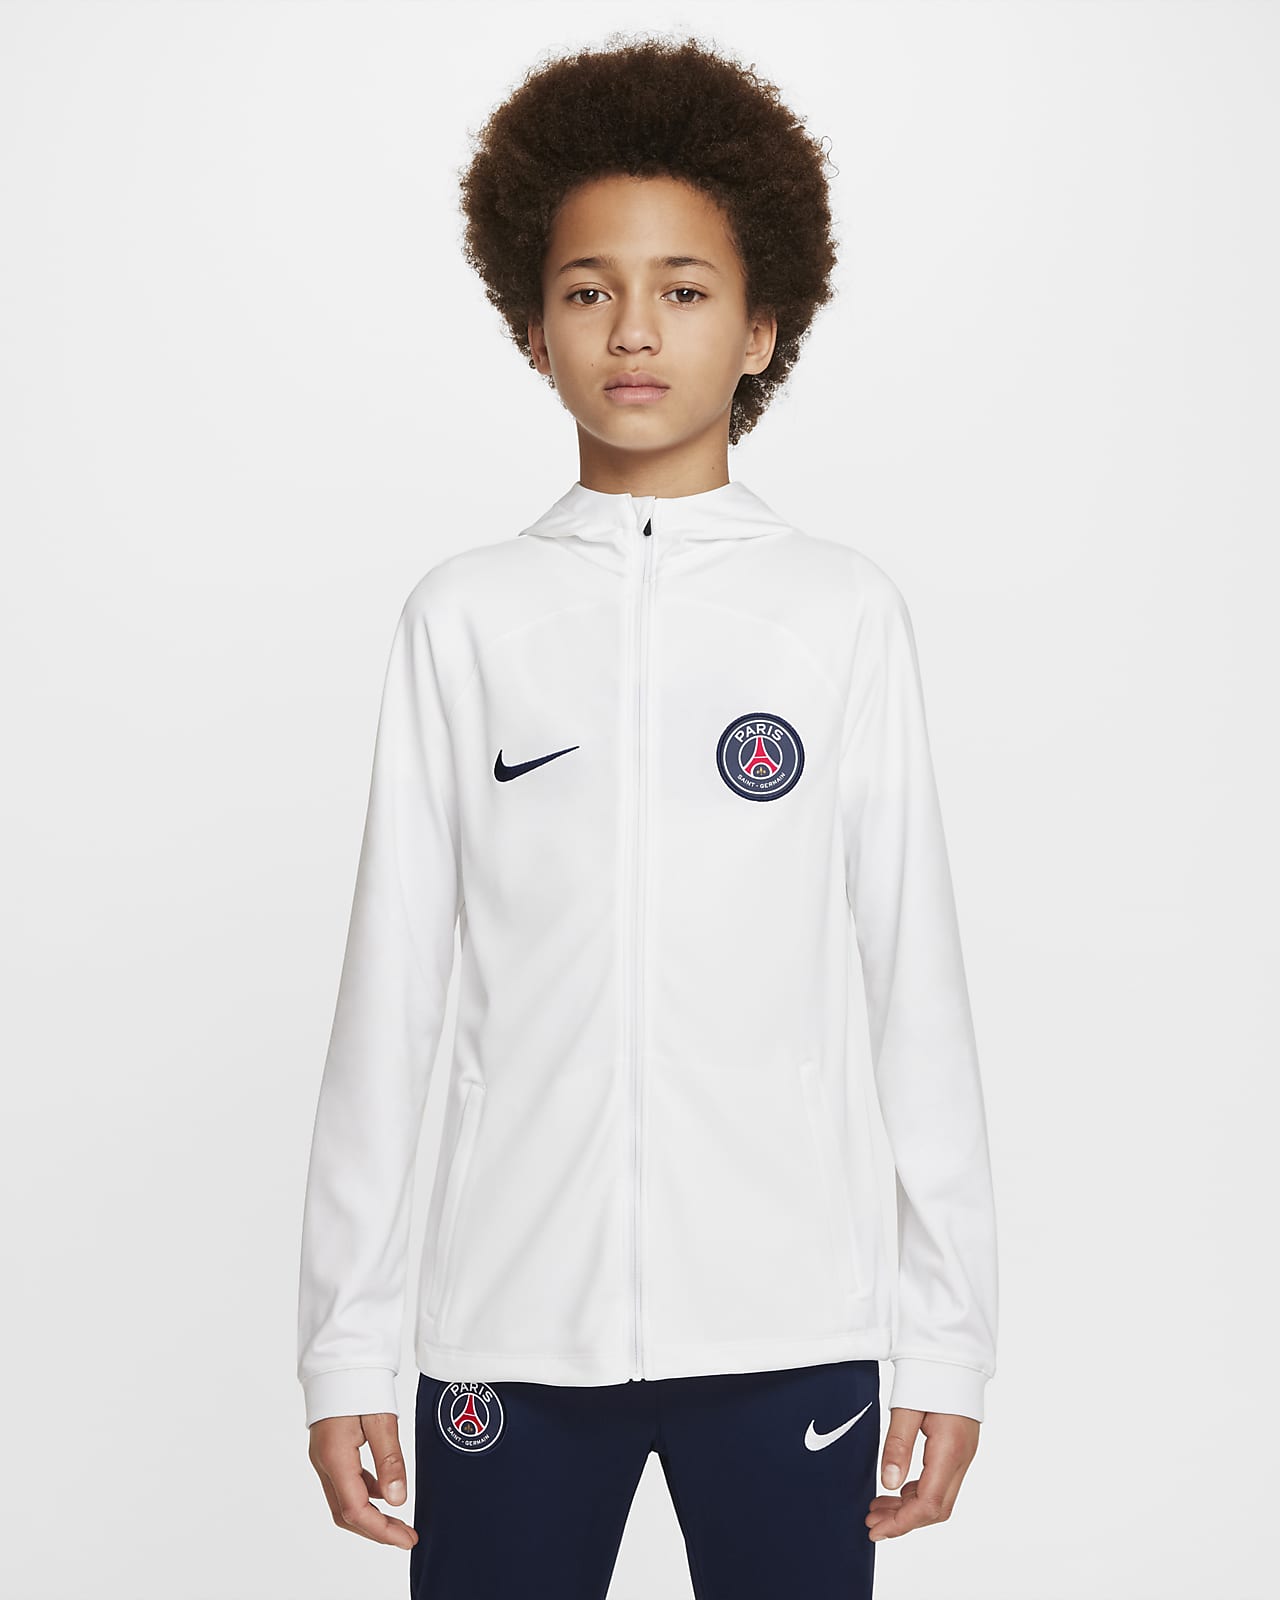 París Saint-Germain Strike Chándal fútbol de Knit Dri-FIT - Niño/a. Nike ES